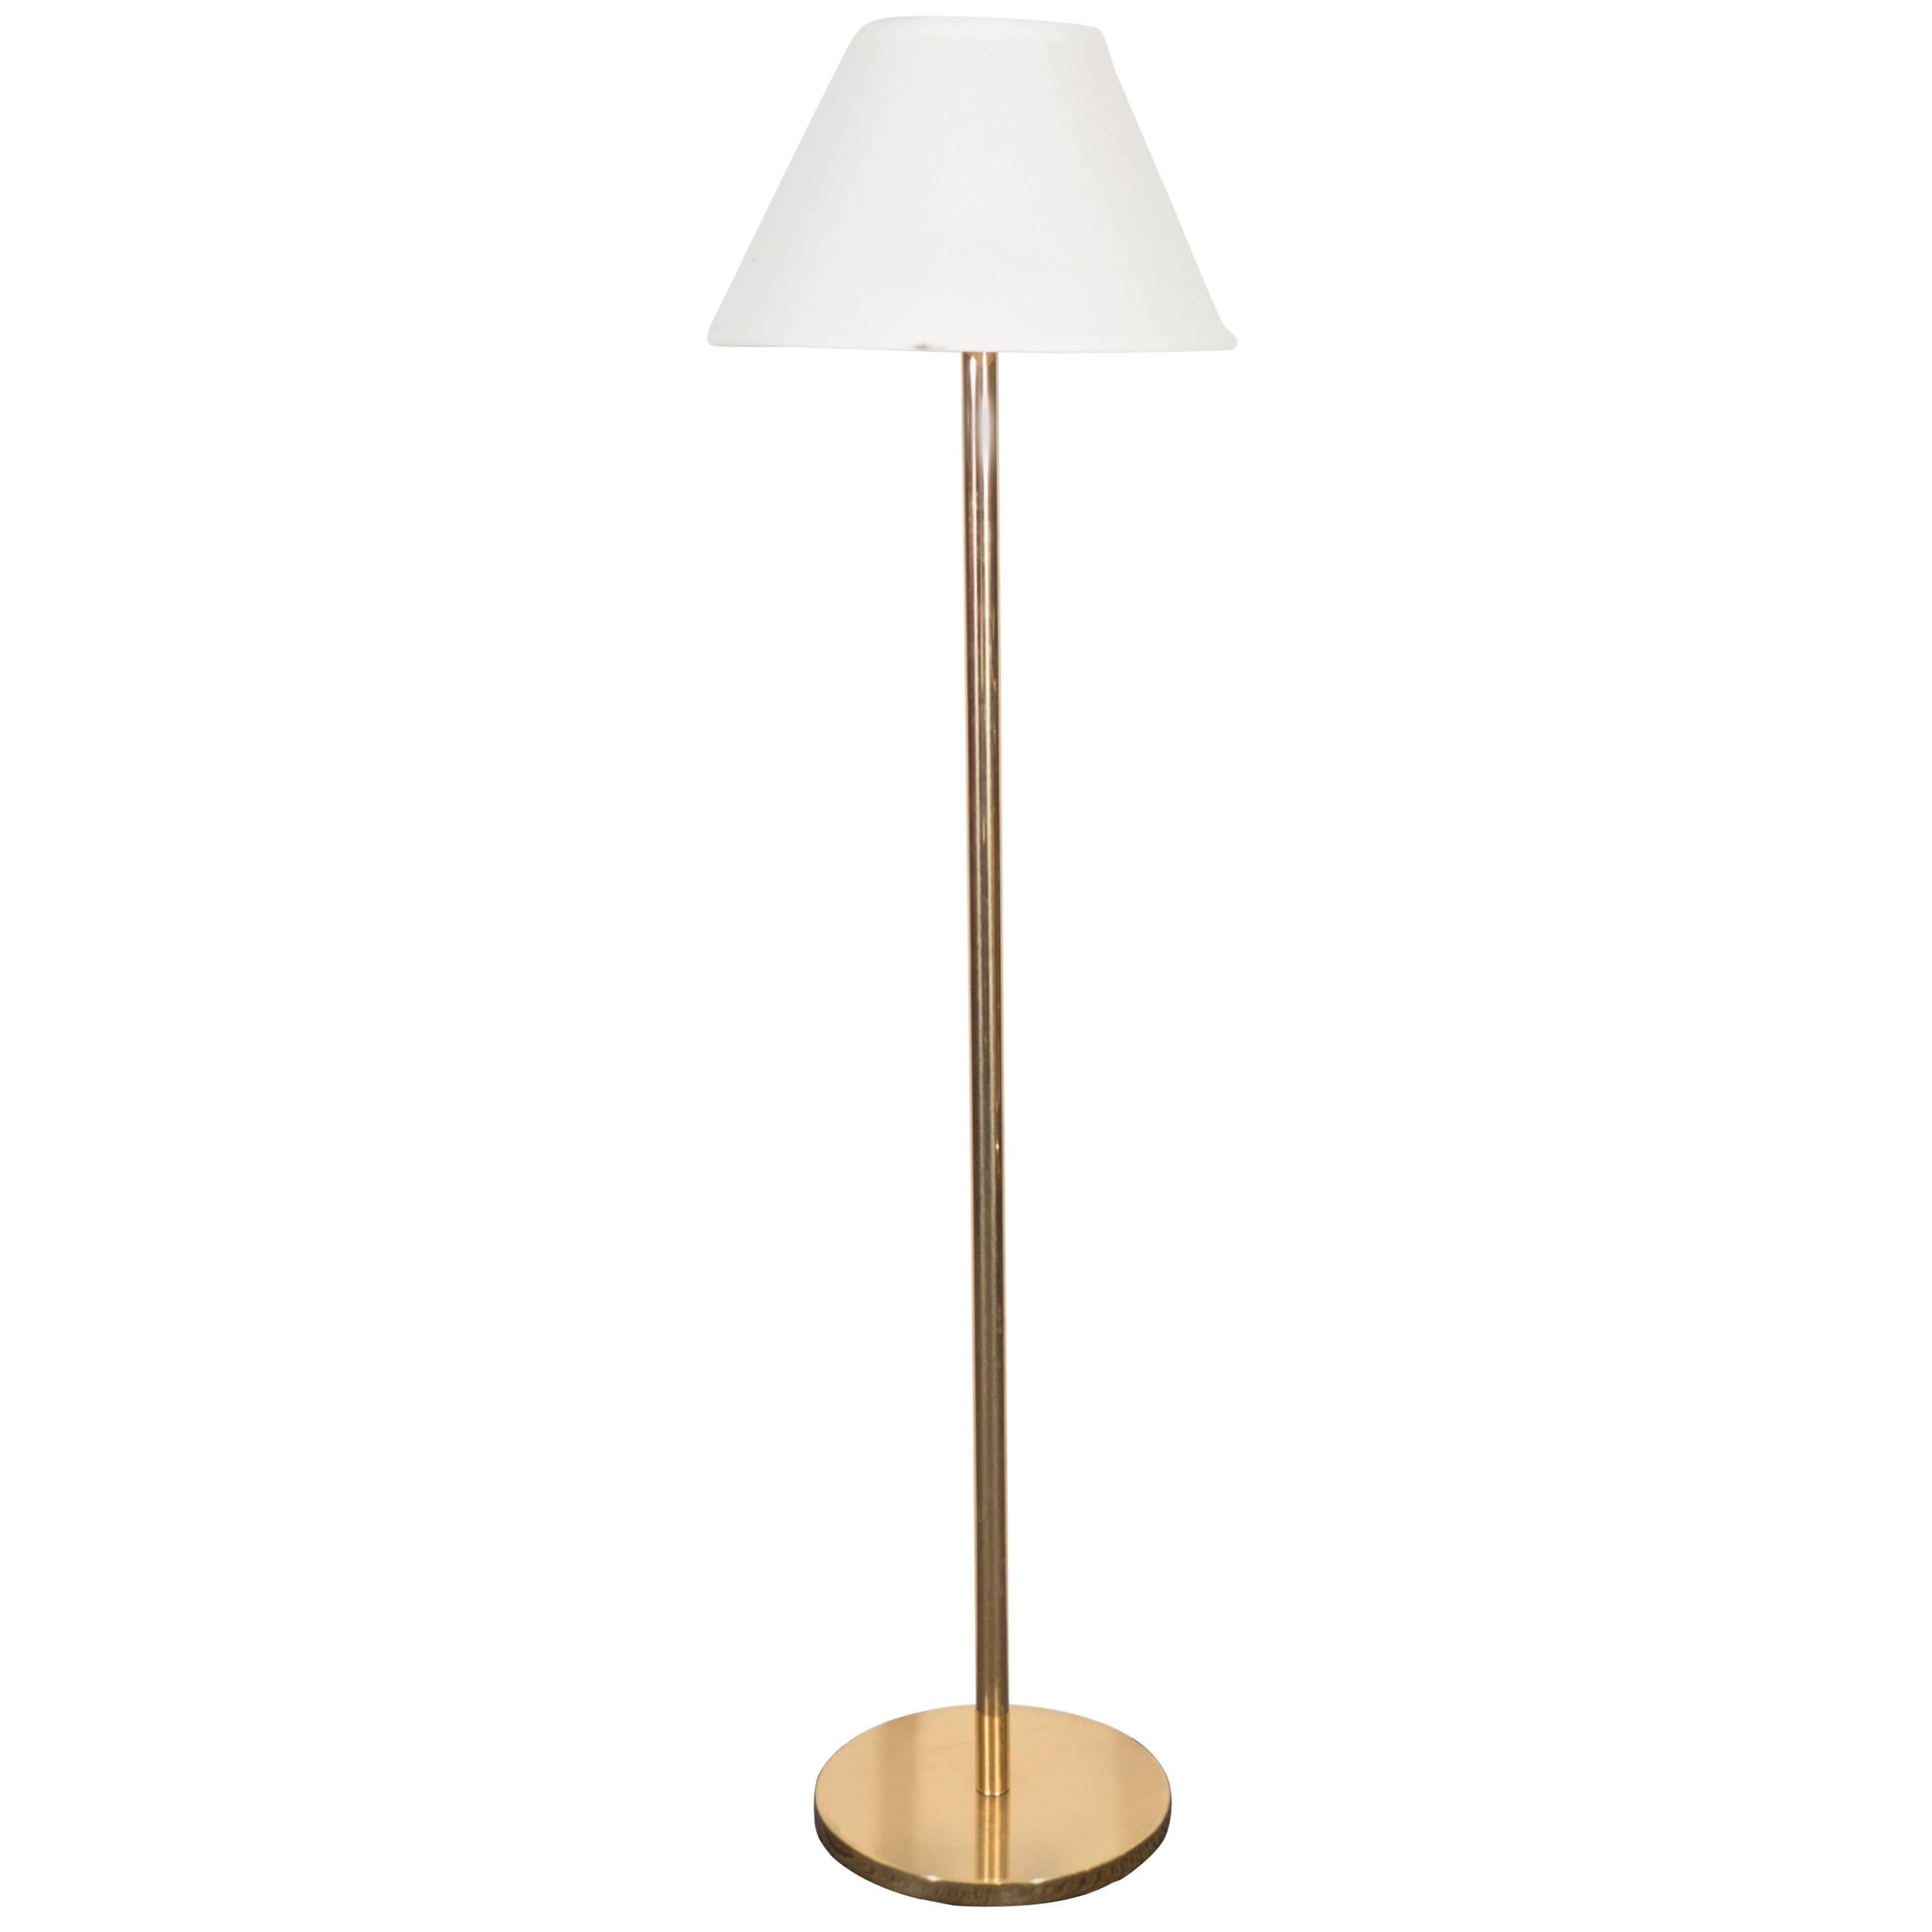 Casella Brass Floor Lamp with Linen Shade